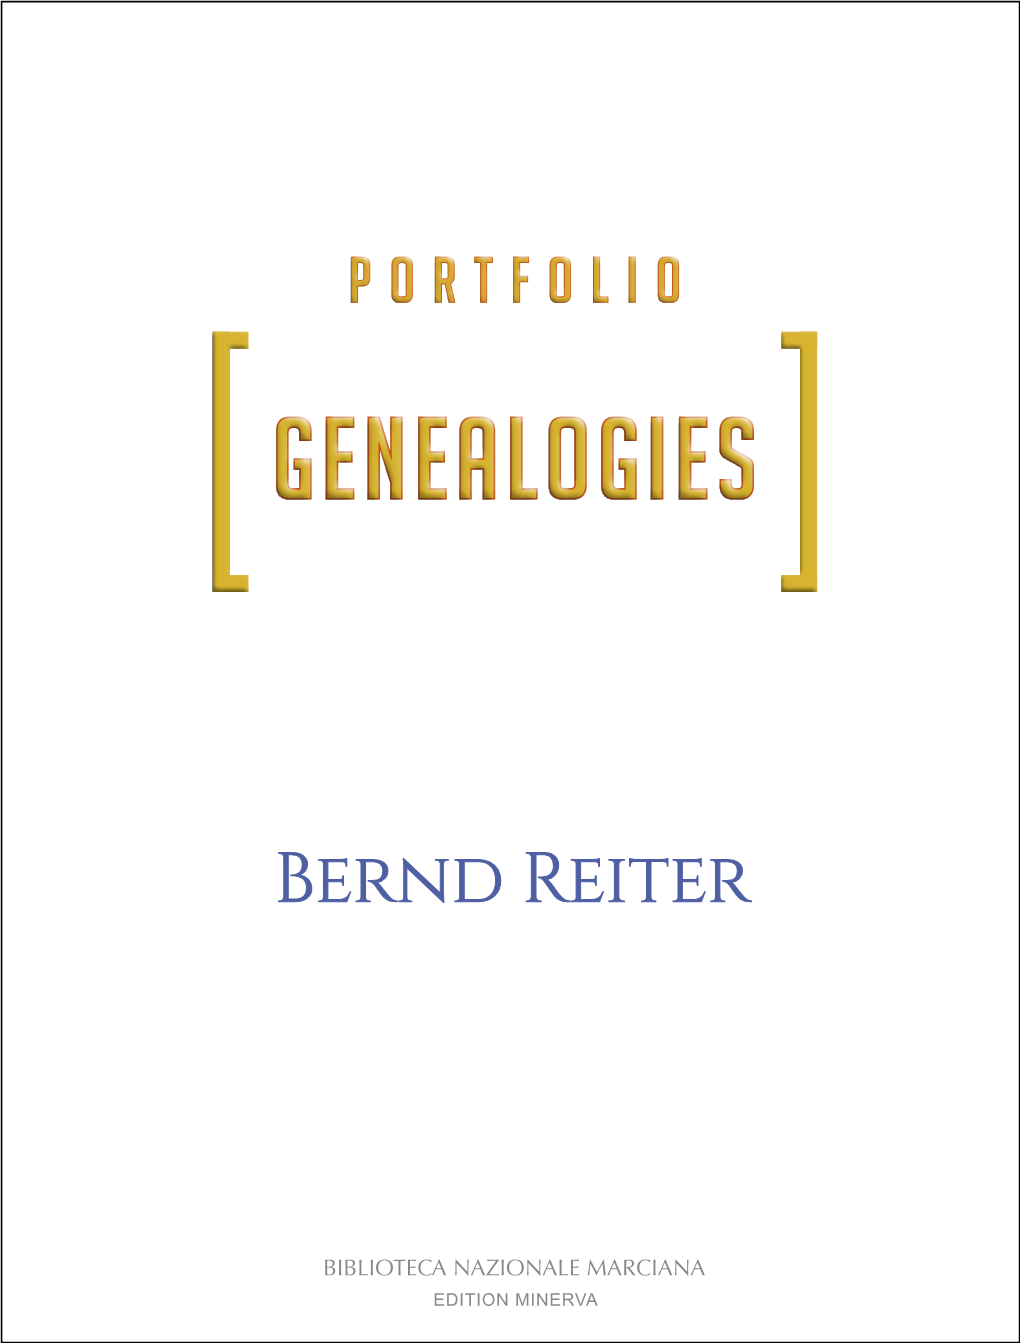 Download Katalog Portfolio Genealogies Bernd